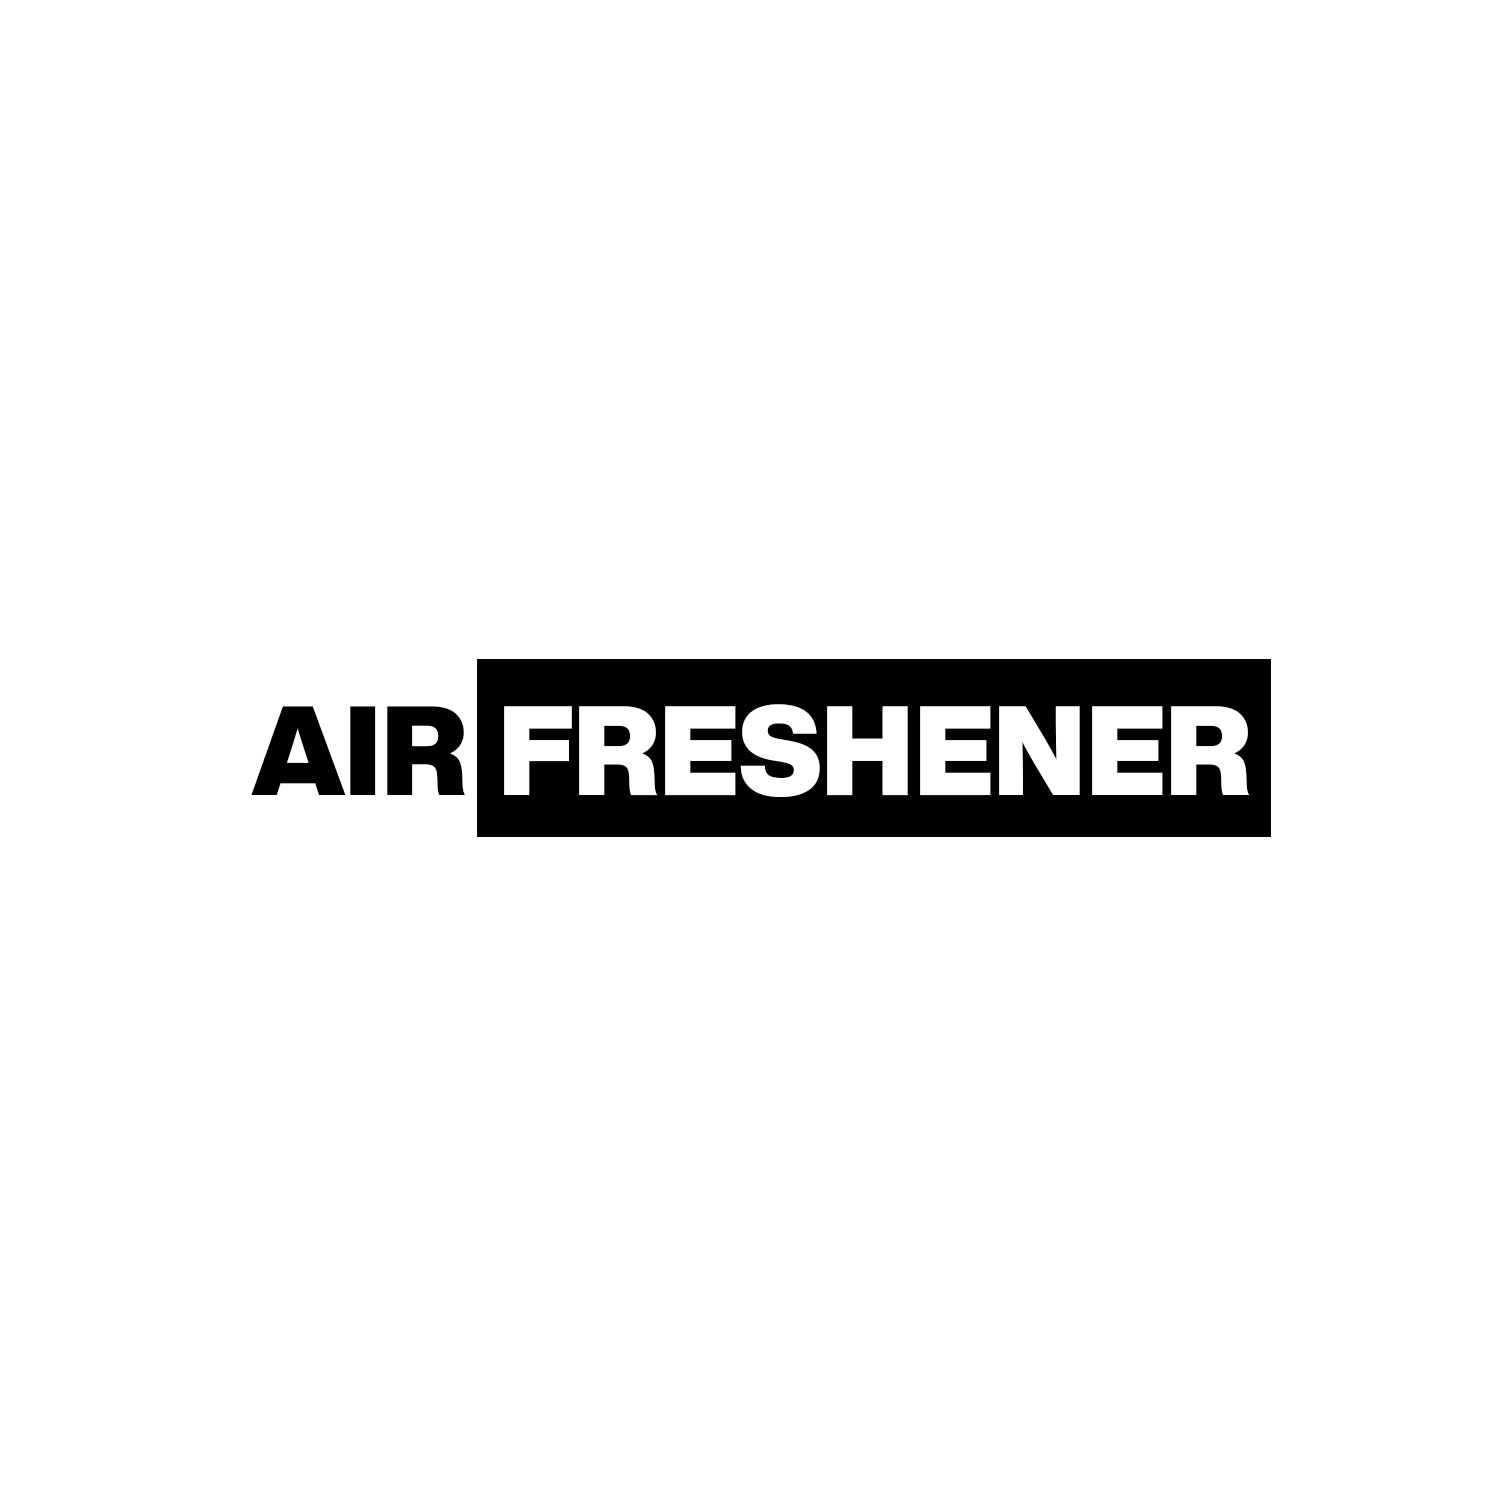 Certified 100% Plant Based Air Freshener - Finishol